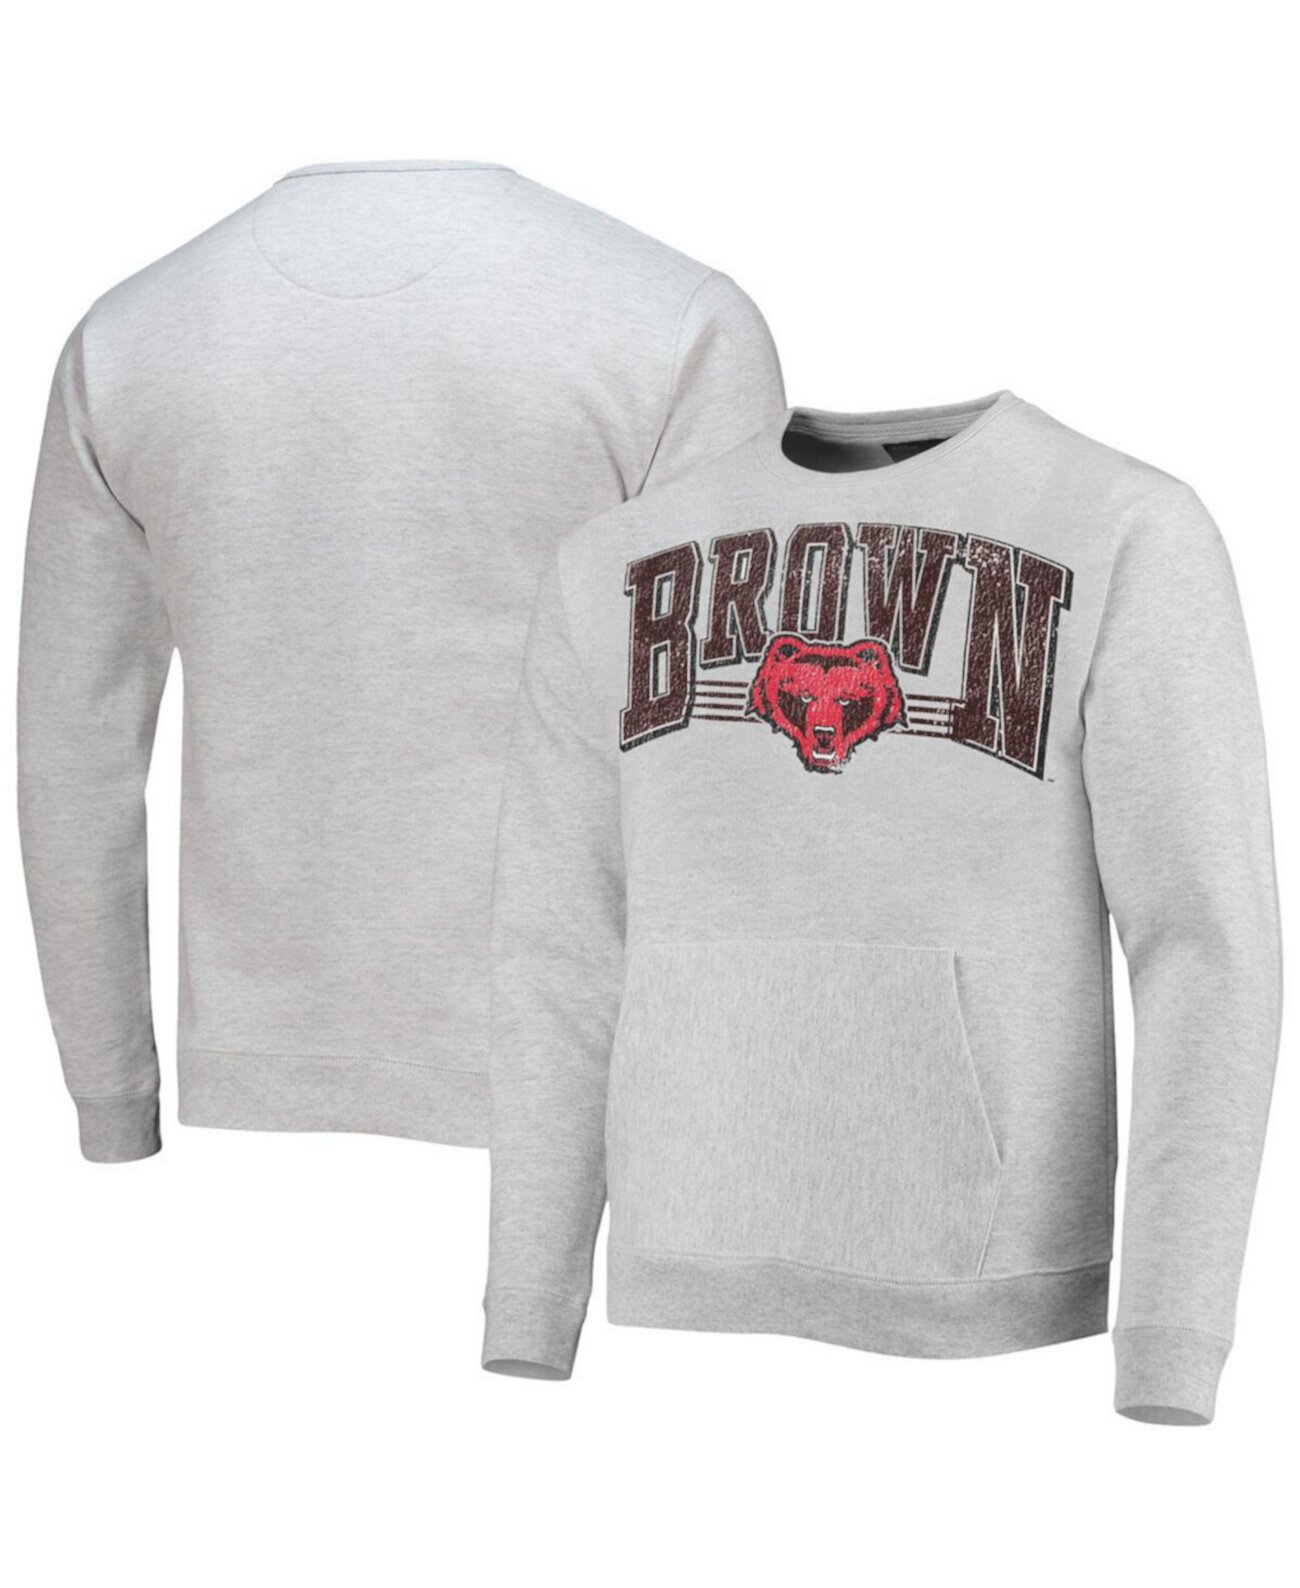 Мужской пуловер с карманами серого цвета Brown Bears Upperclassman League Collegiate Wear